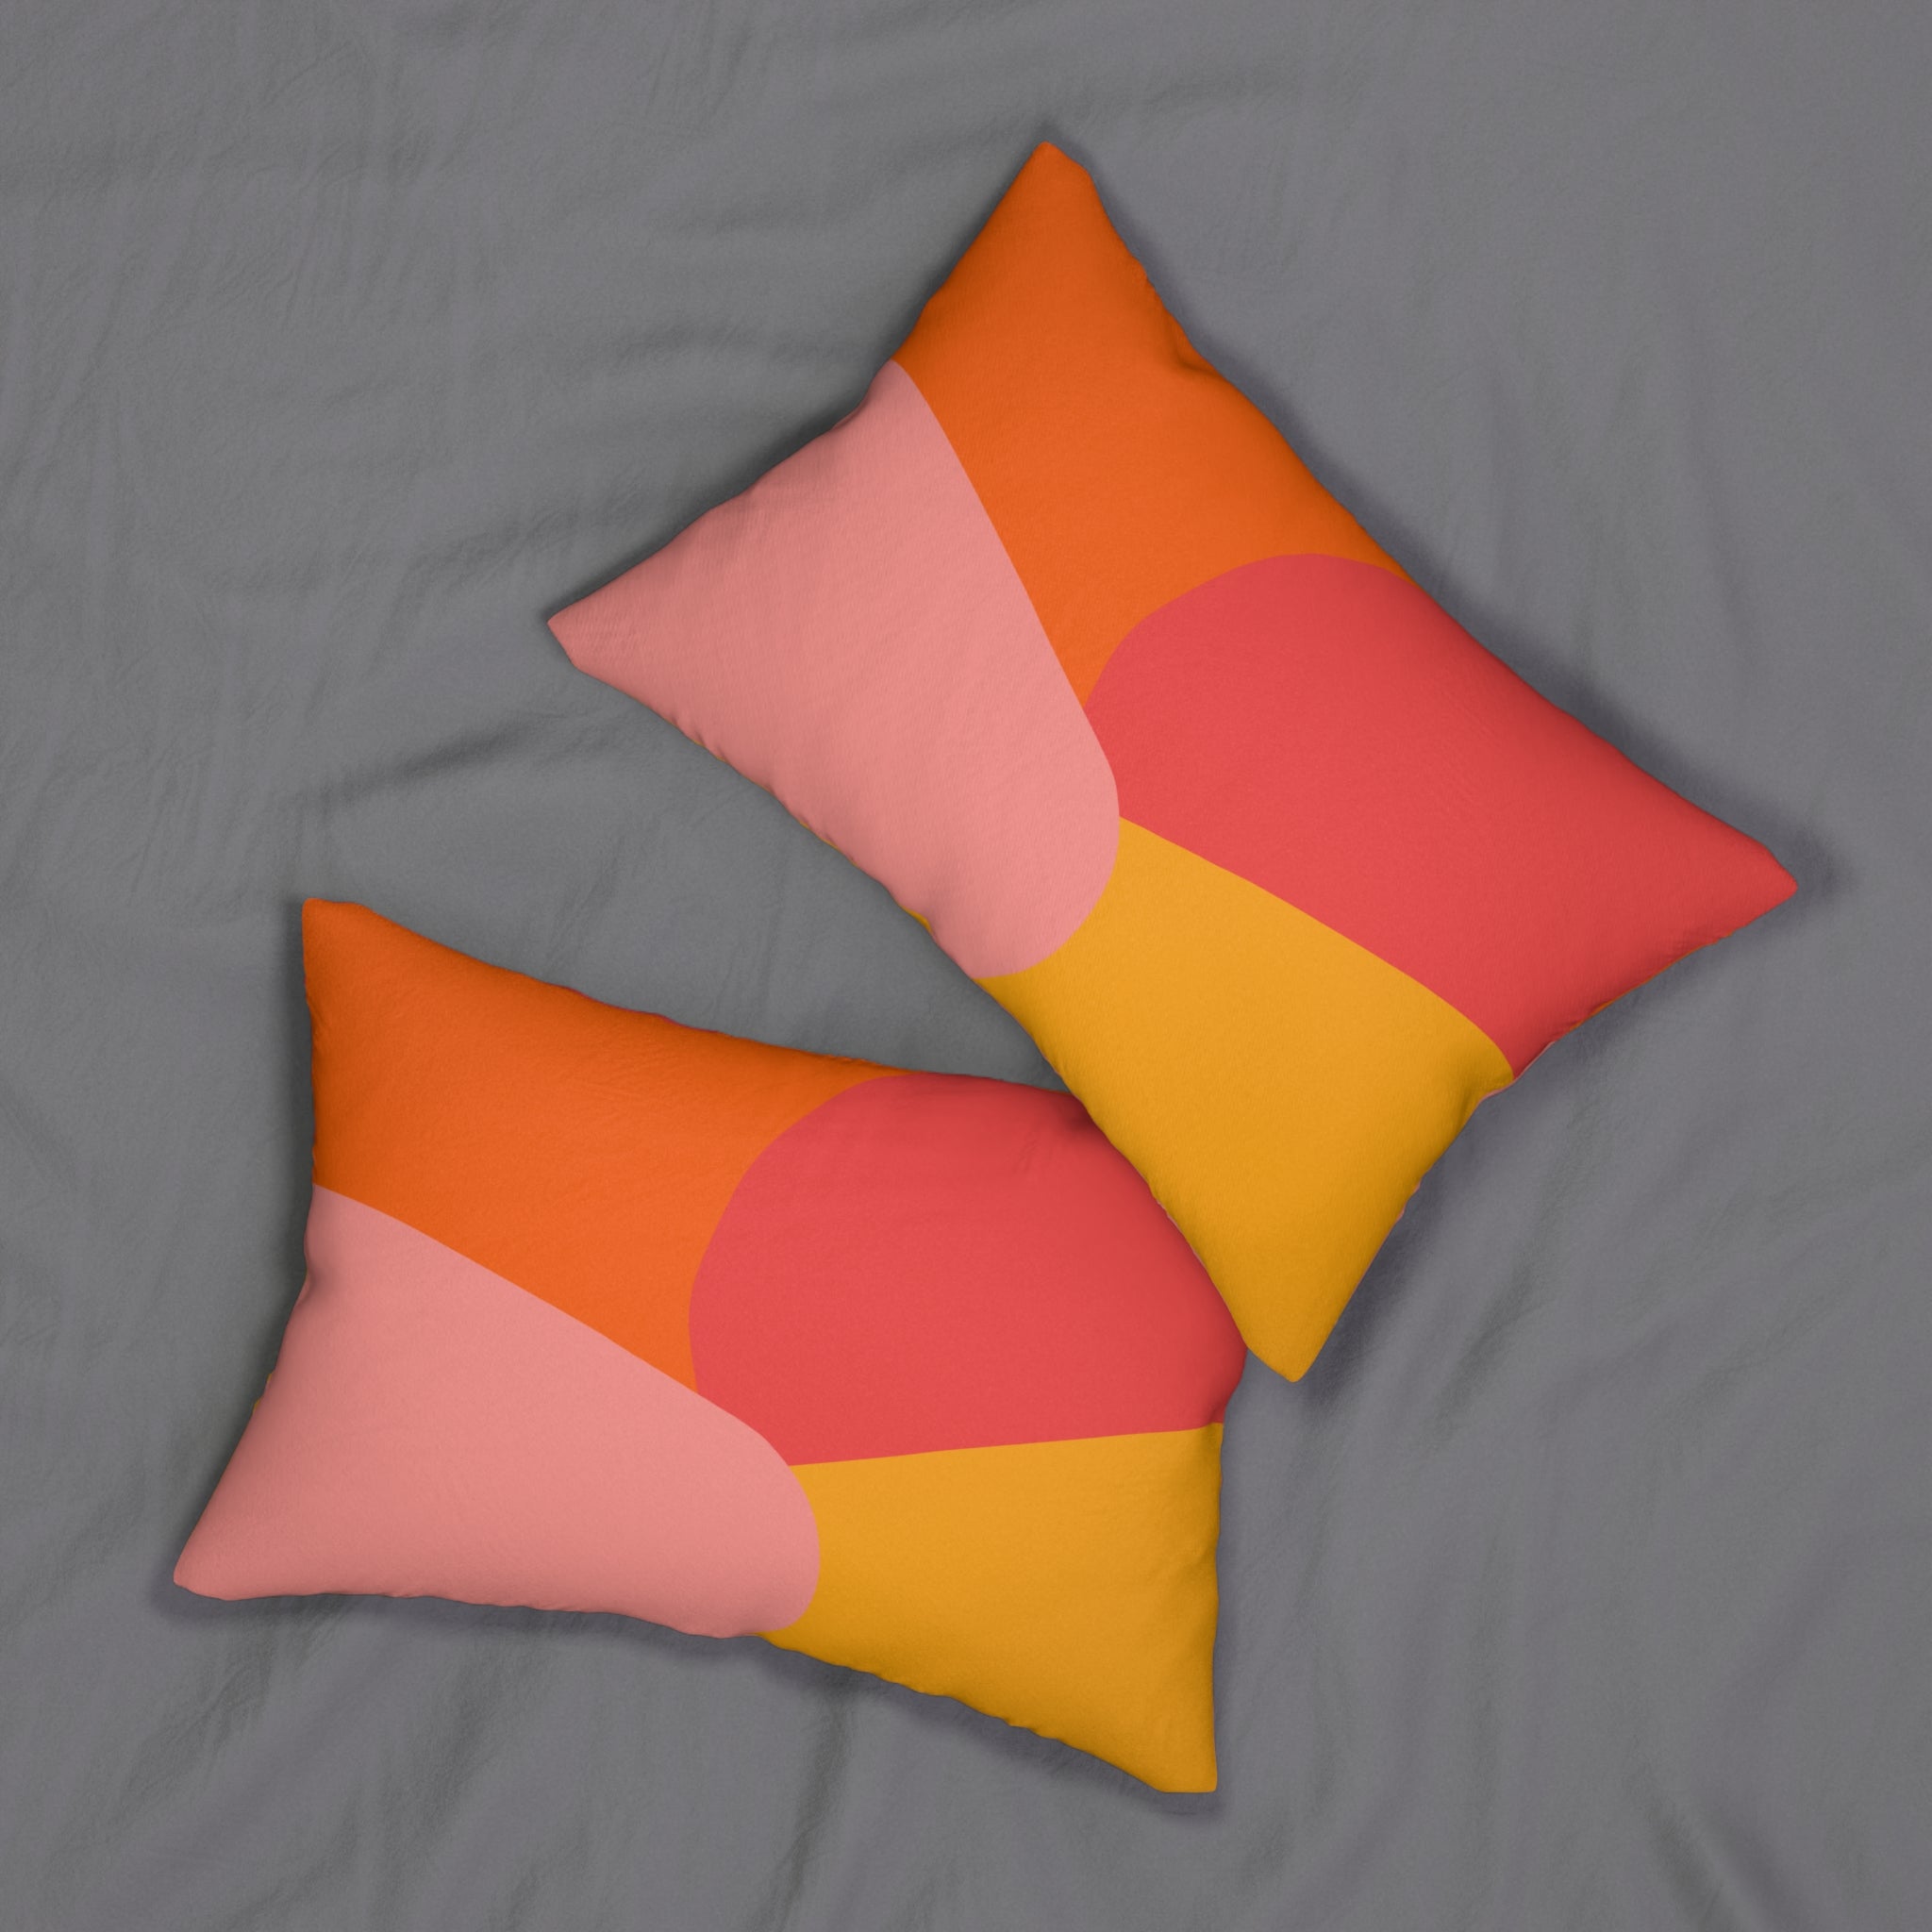 Sunset Pillow